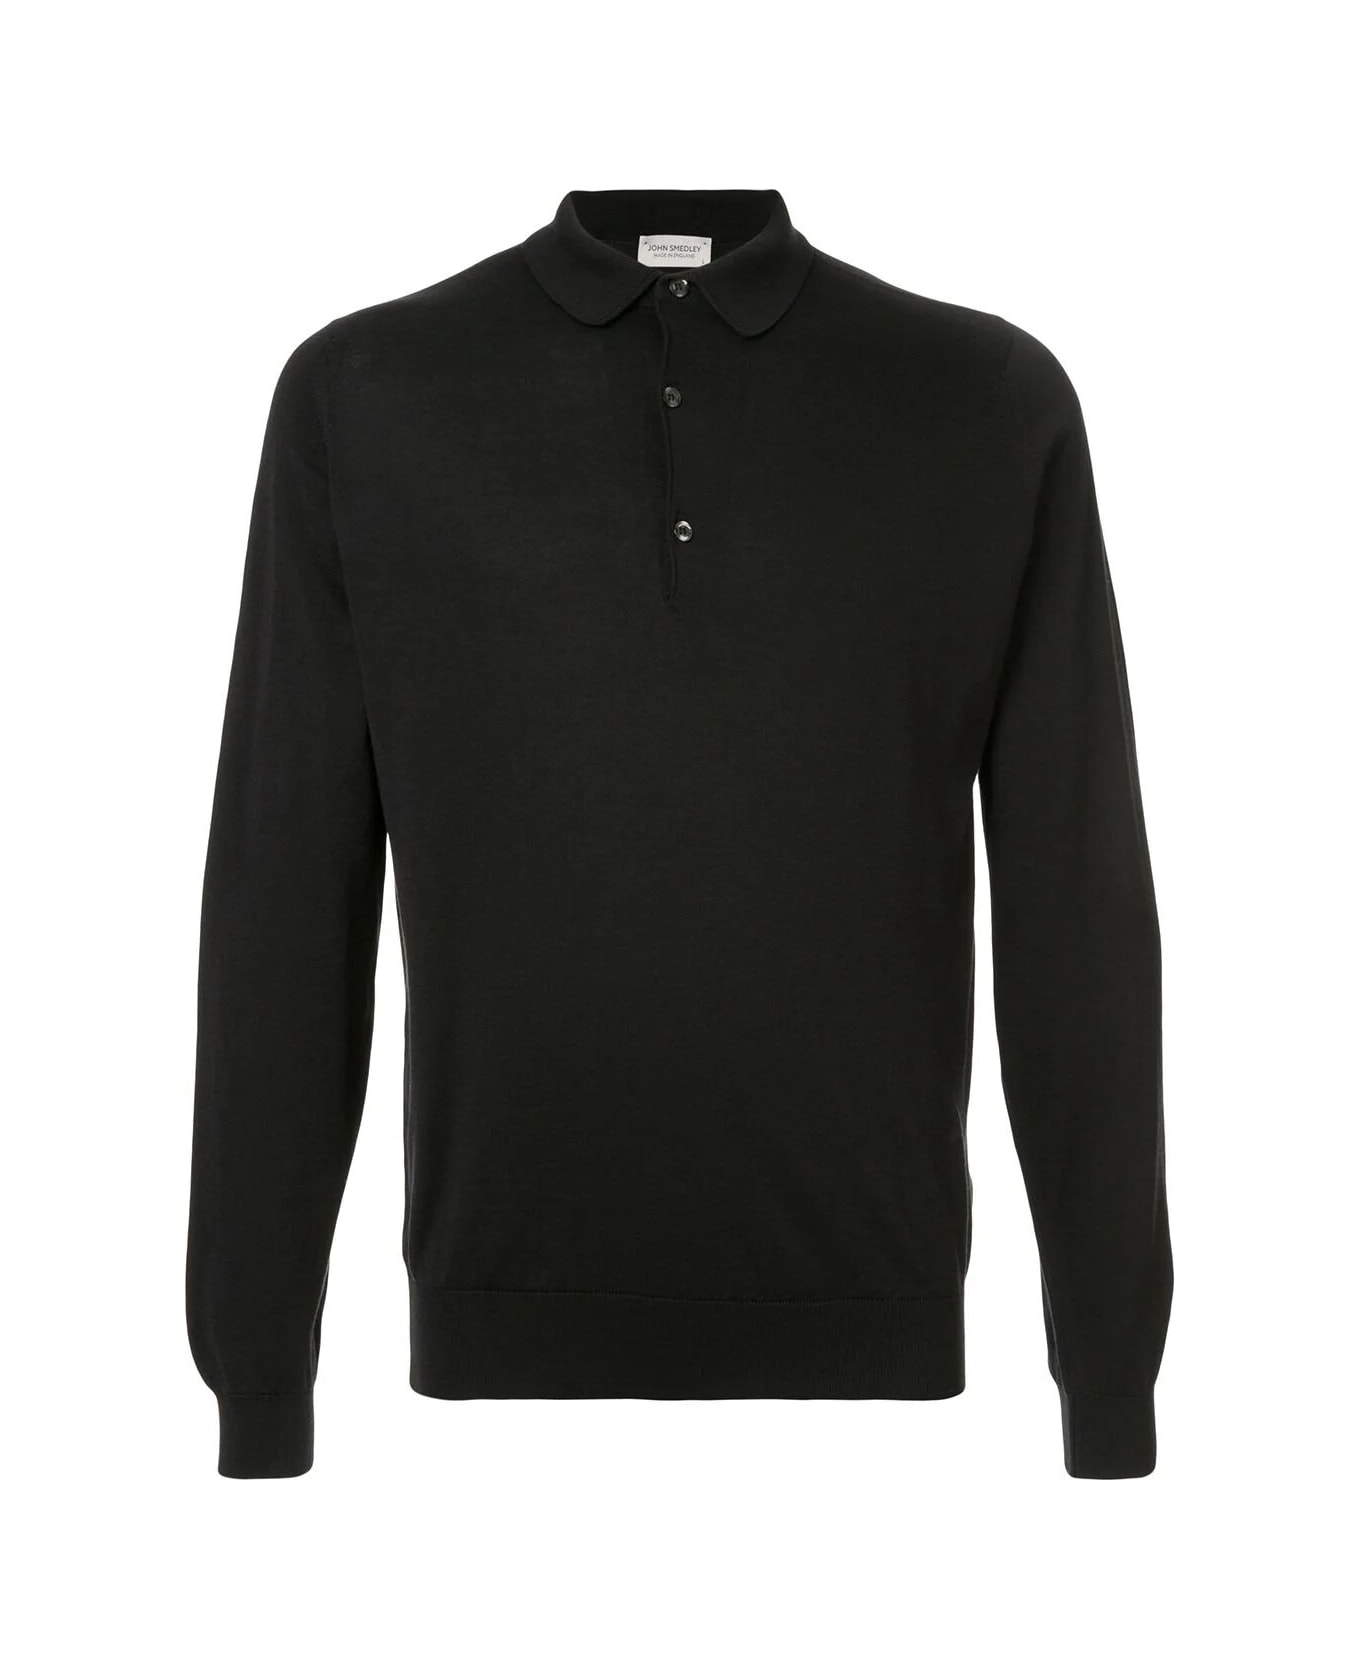 John Smedley Bradwell Long Sleeves Shirt - Black